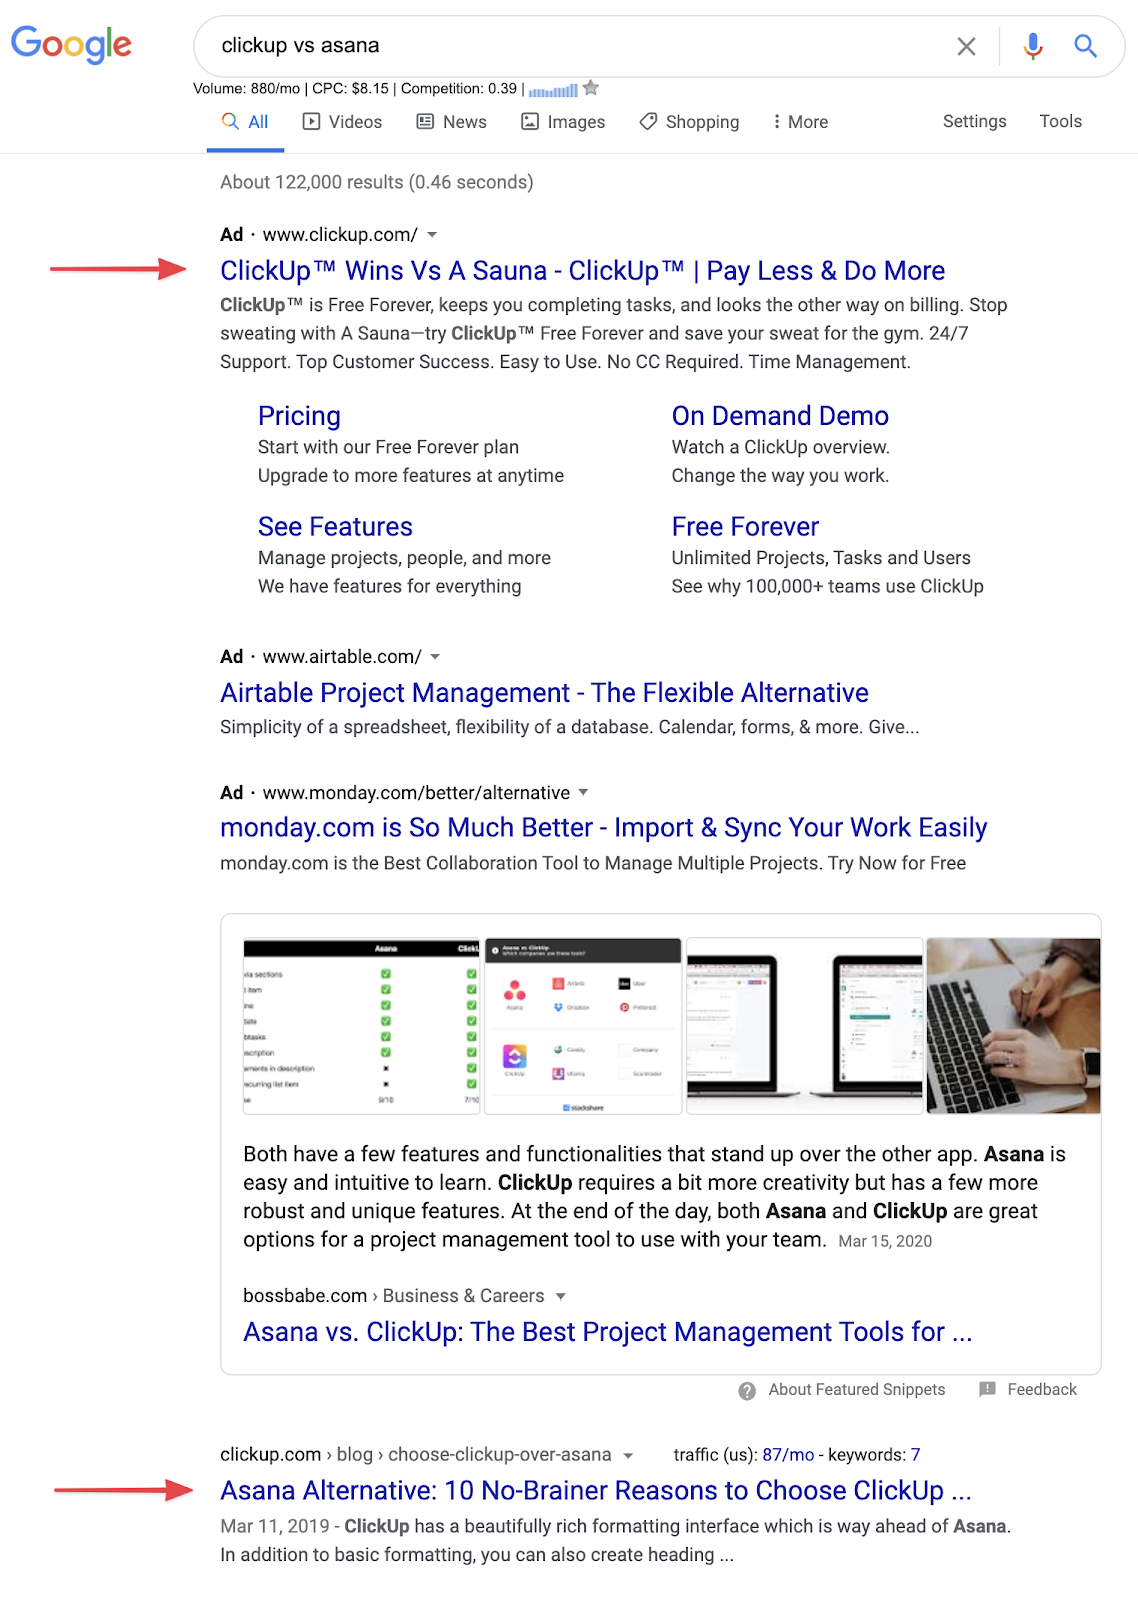 clickup vs asana search results page